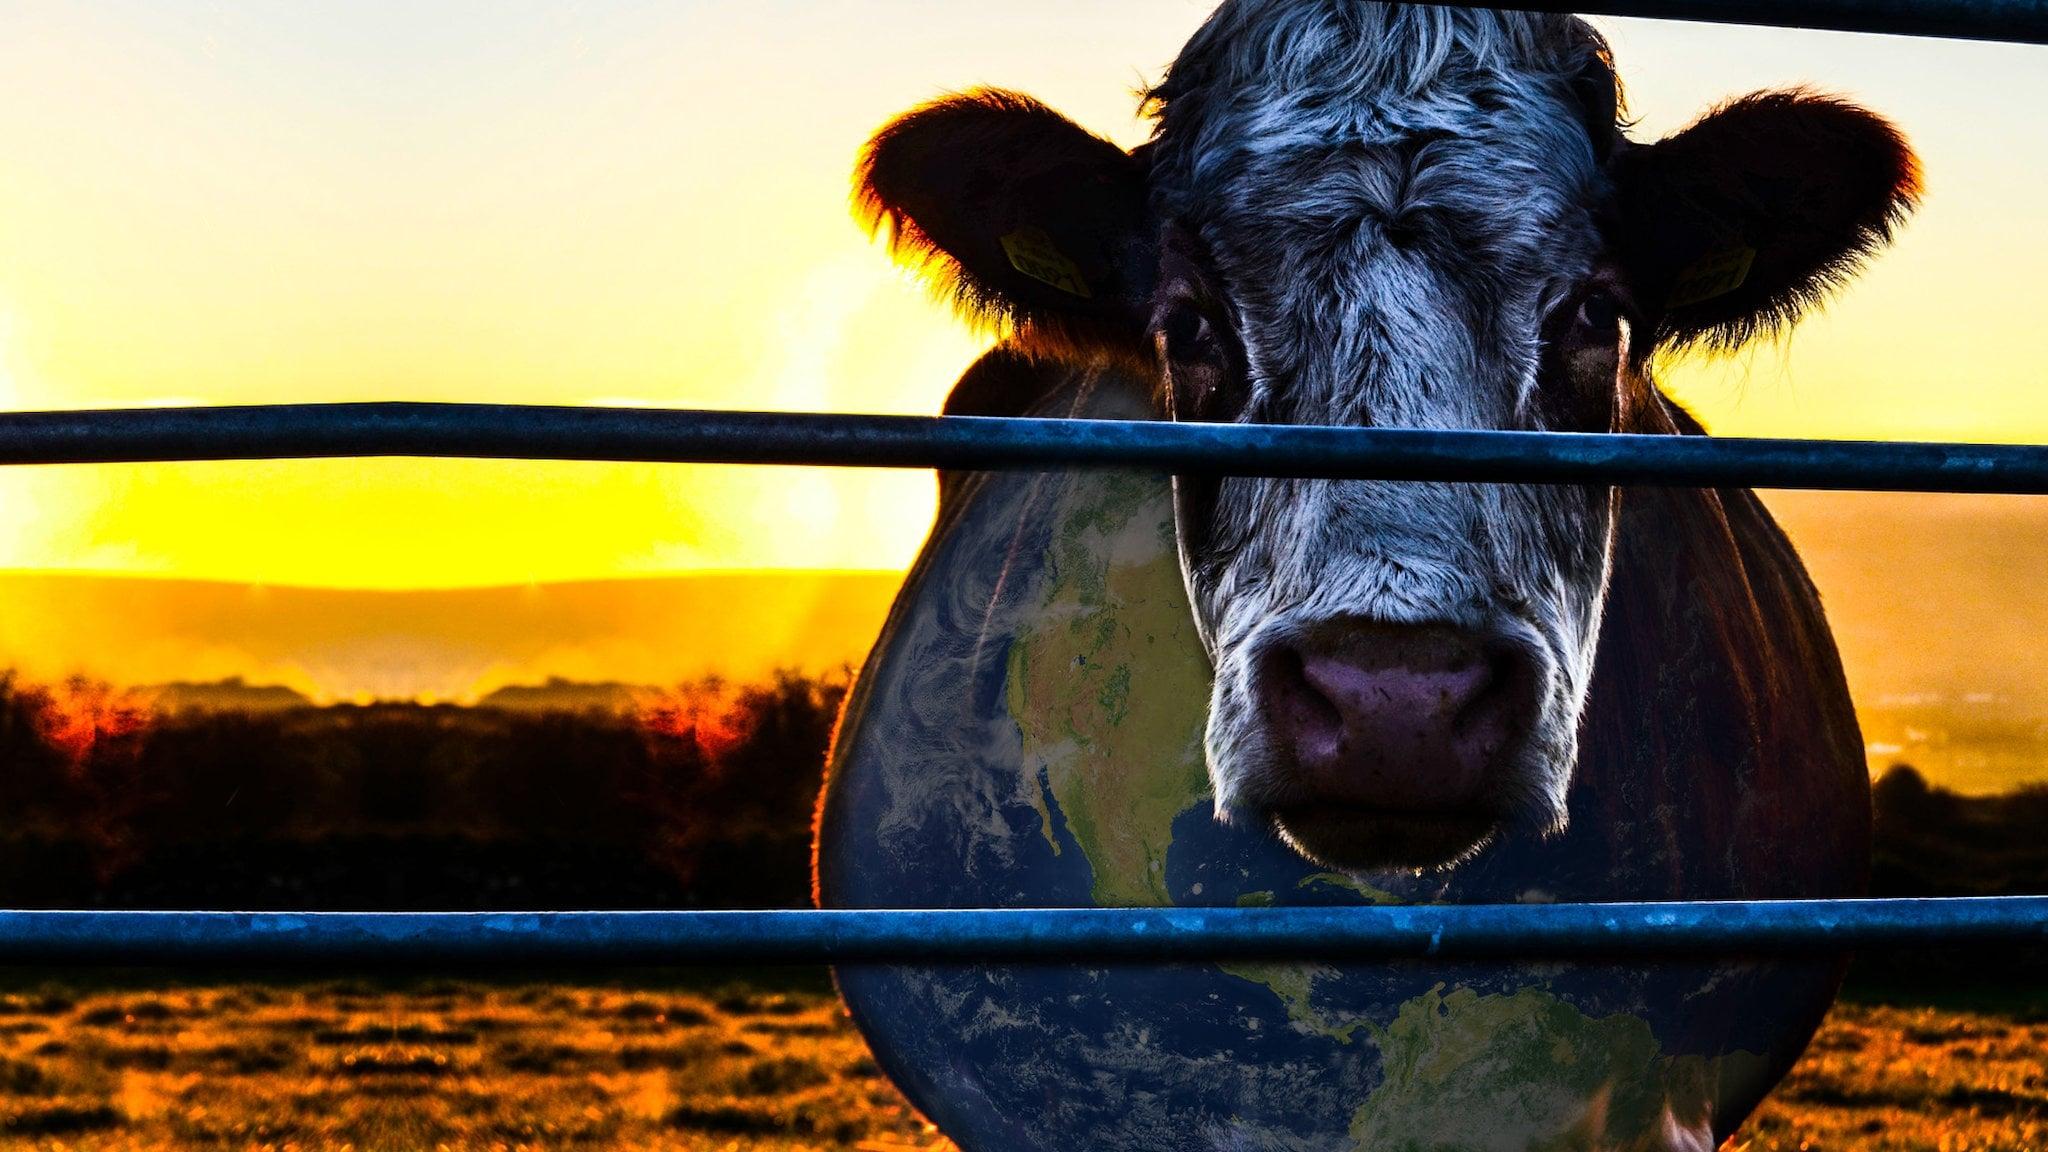 Cowspiracy: The Sustainability Secret backdrop